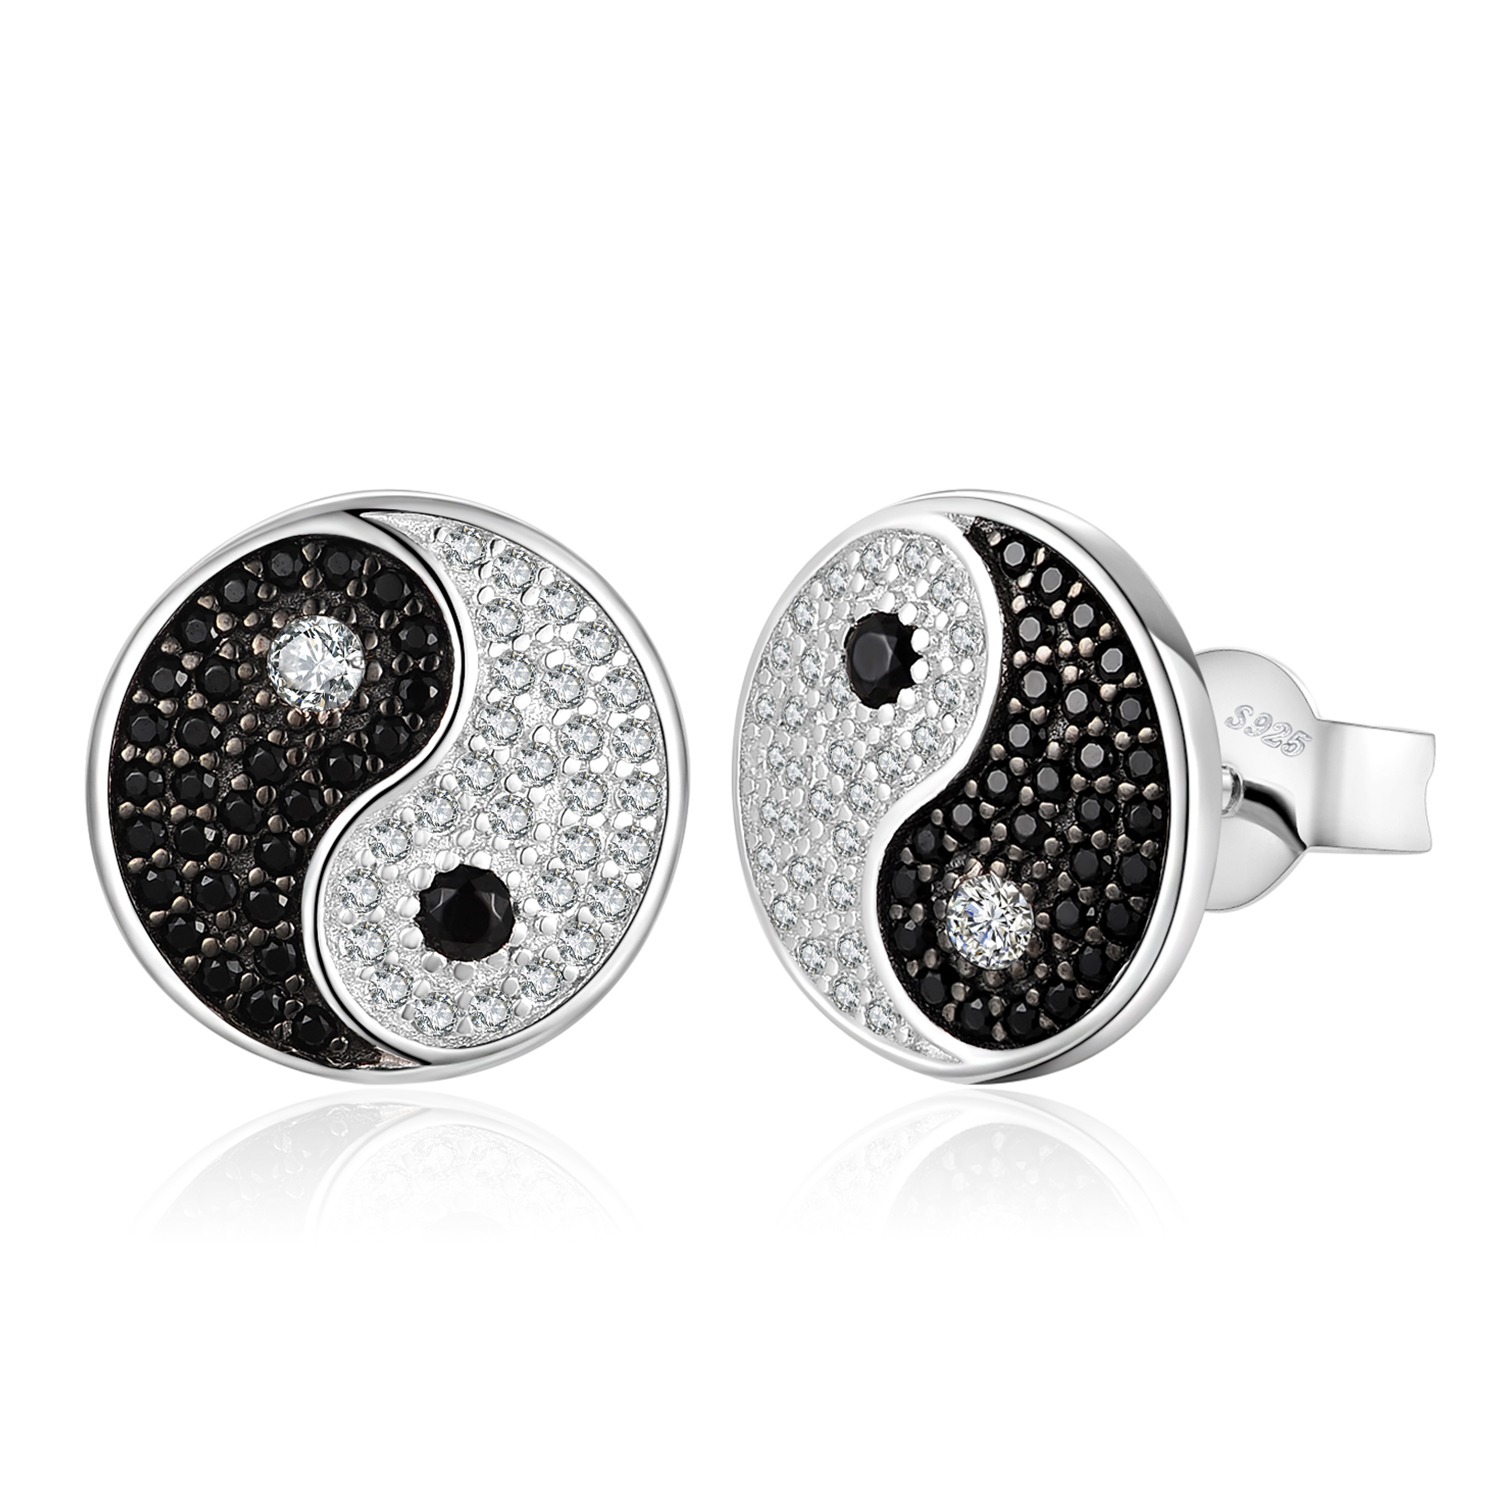 Taiji Earrings Spinel Gem Cubic Zirconia Earrings Stud Sterling Silver JewelryPalace